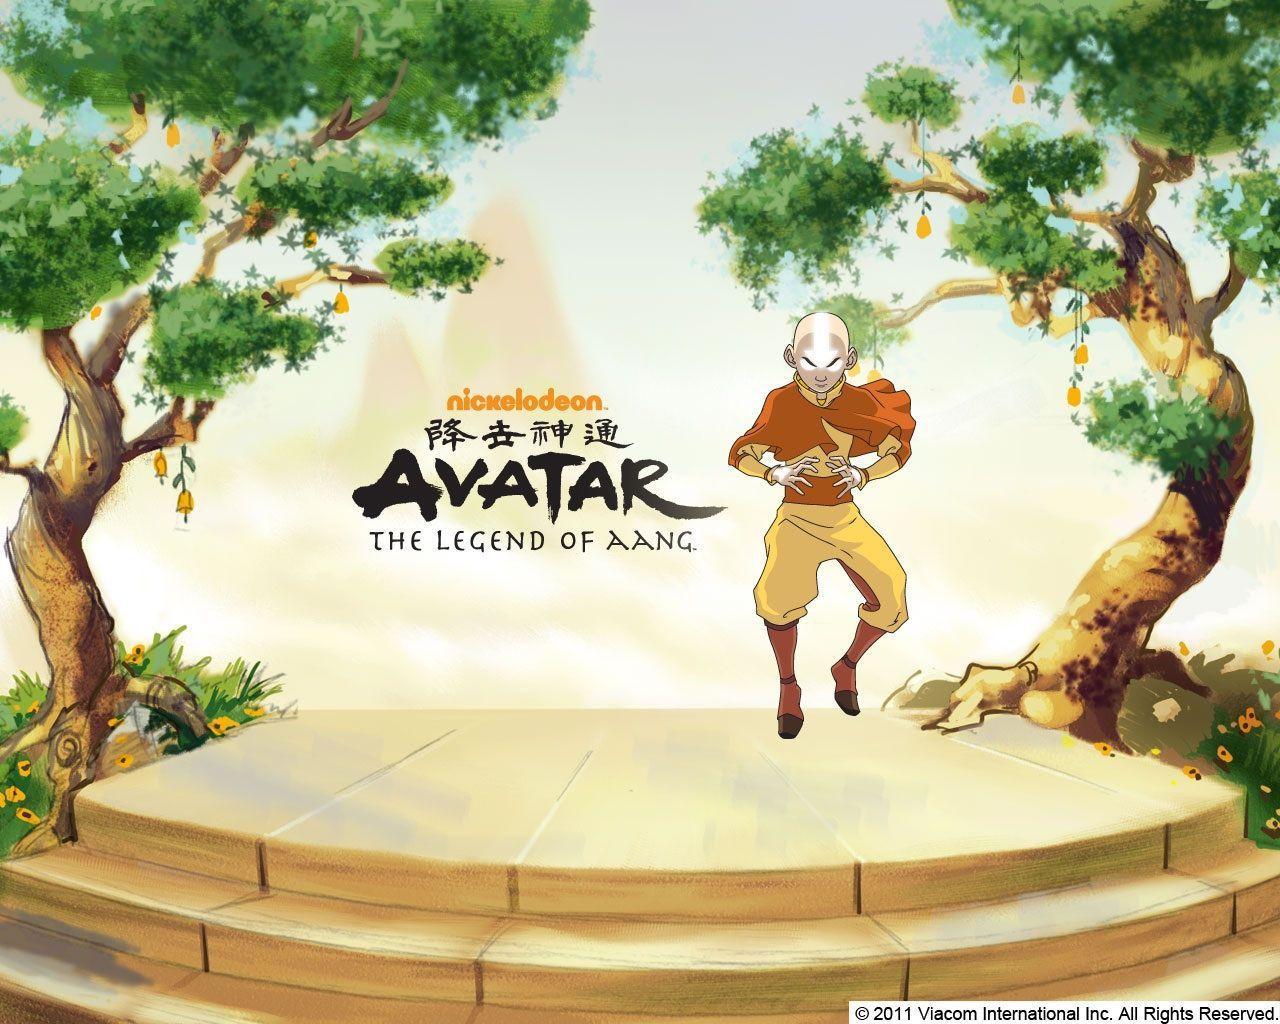 Avatar The Last Airbender Background